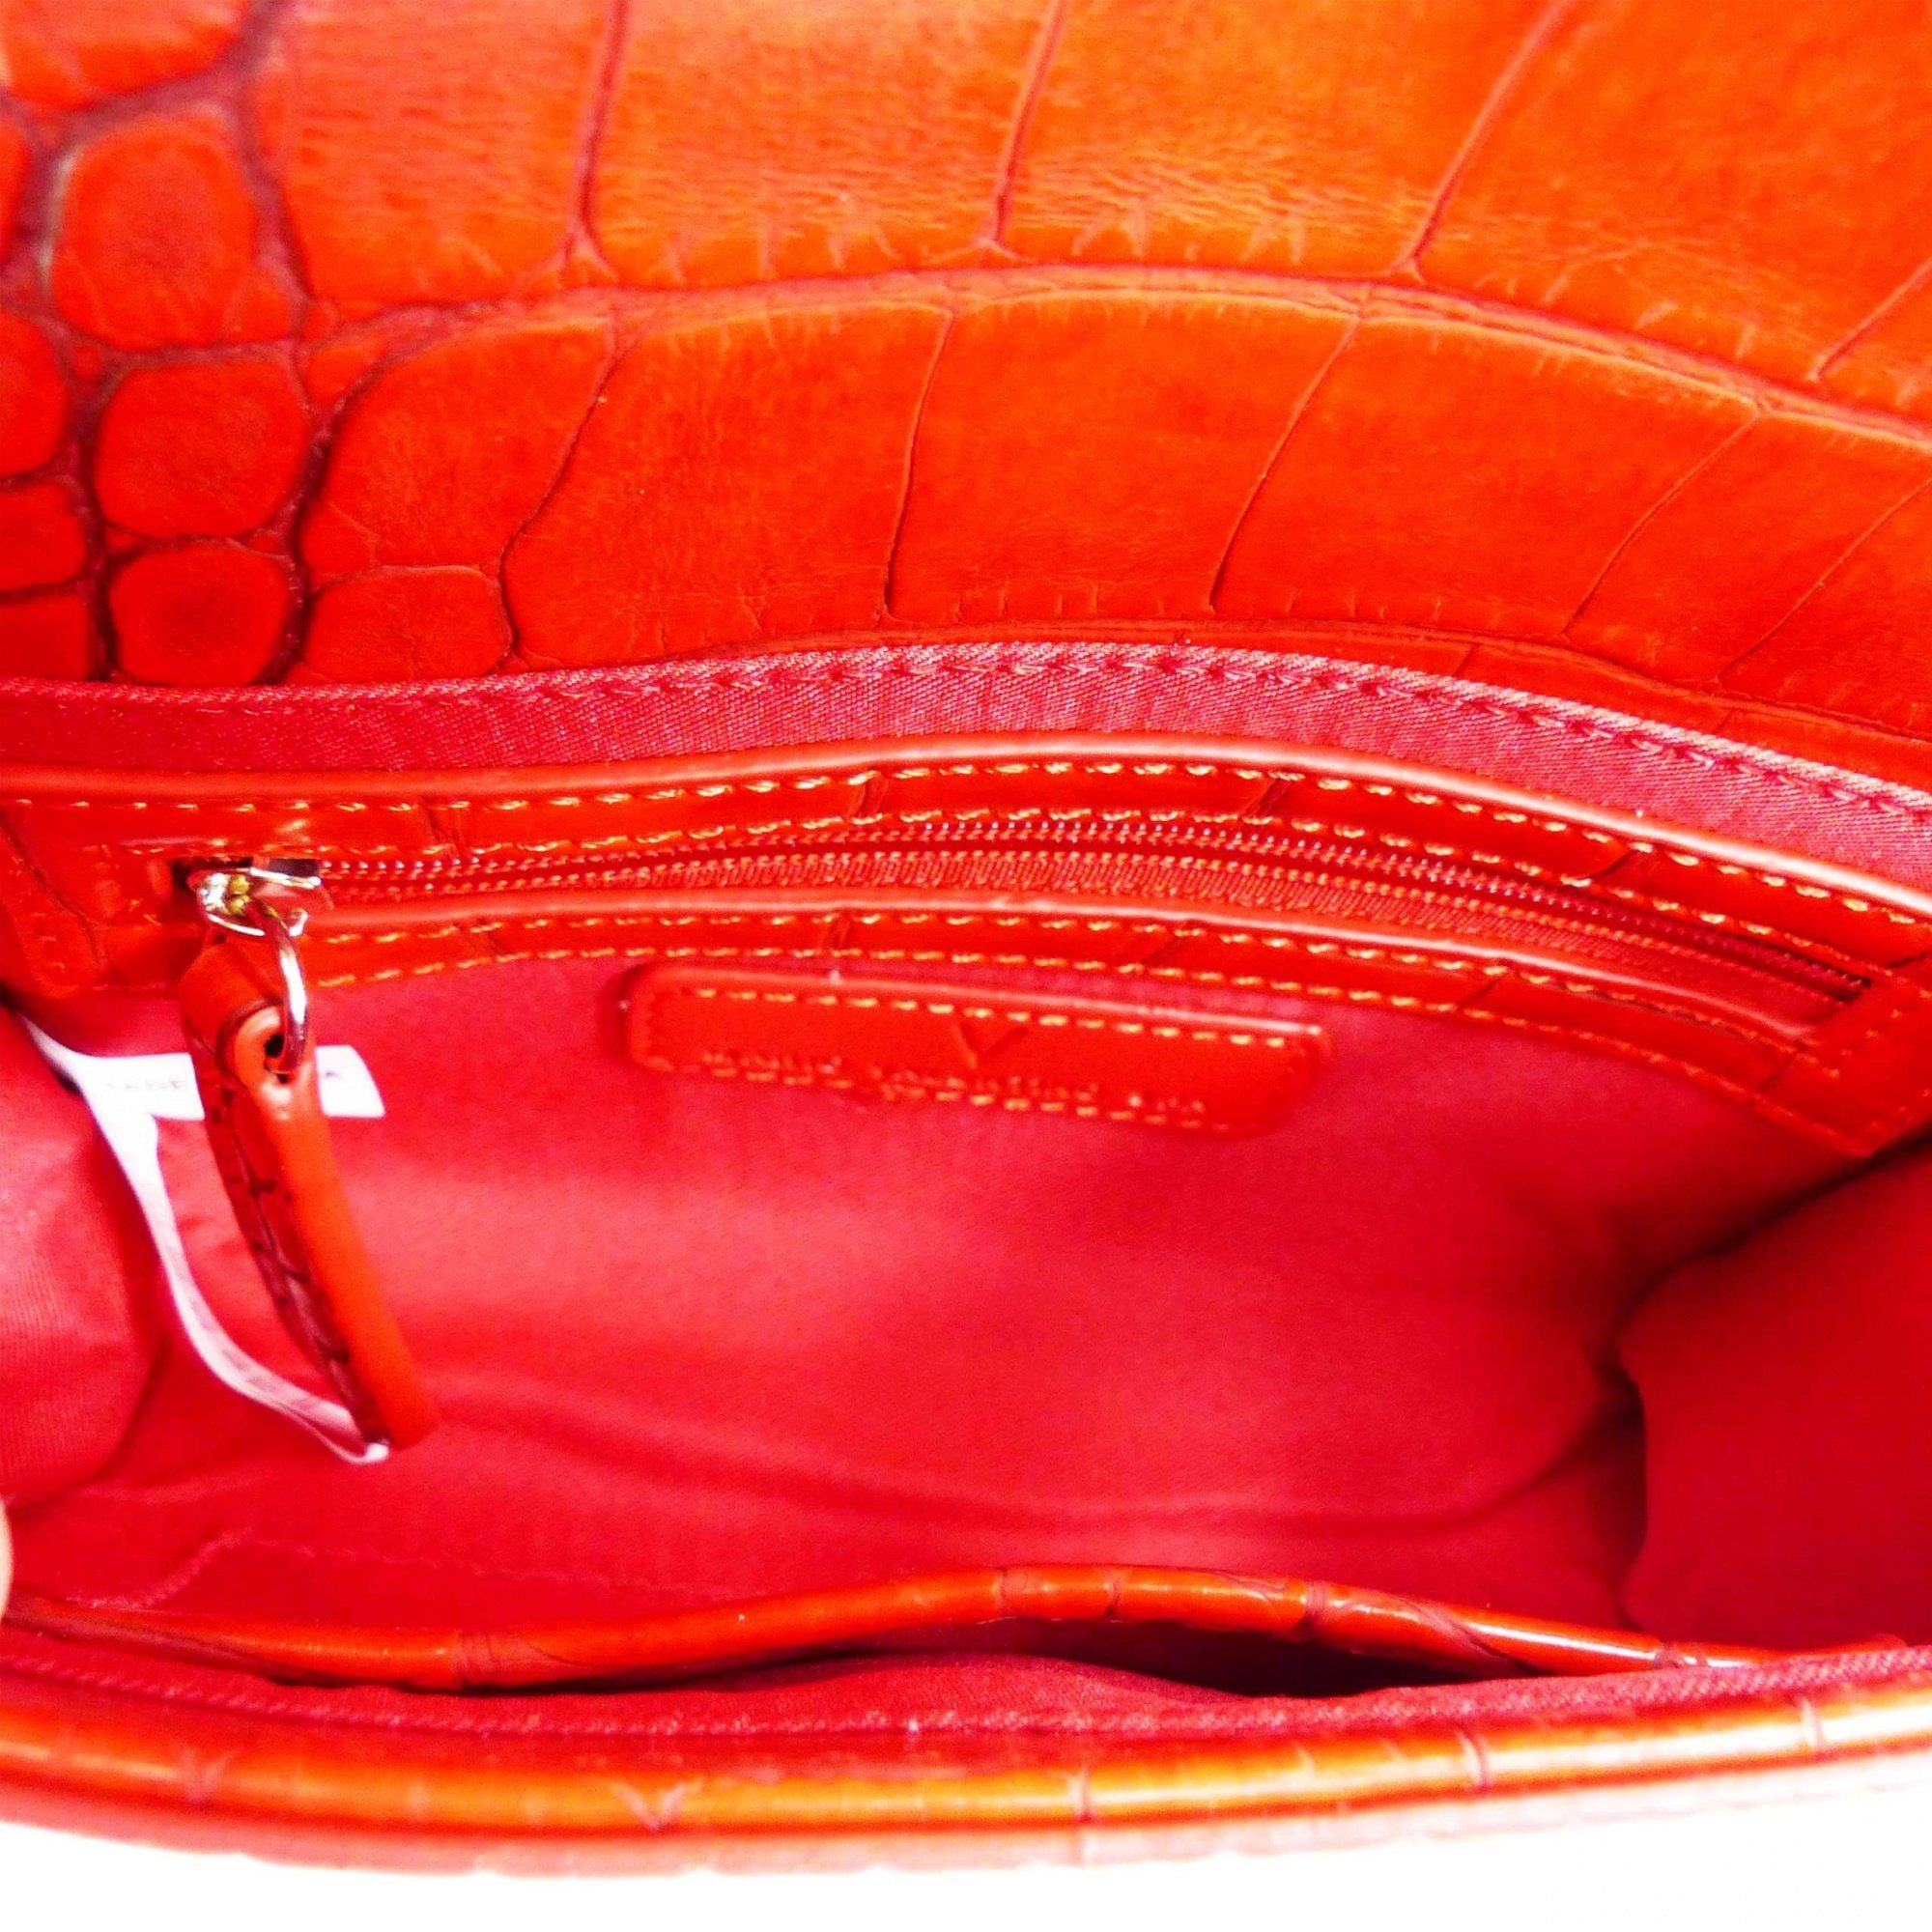 BAGS VALENTINO Handtasche